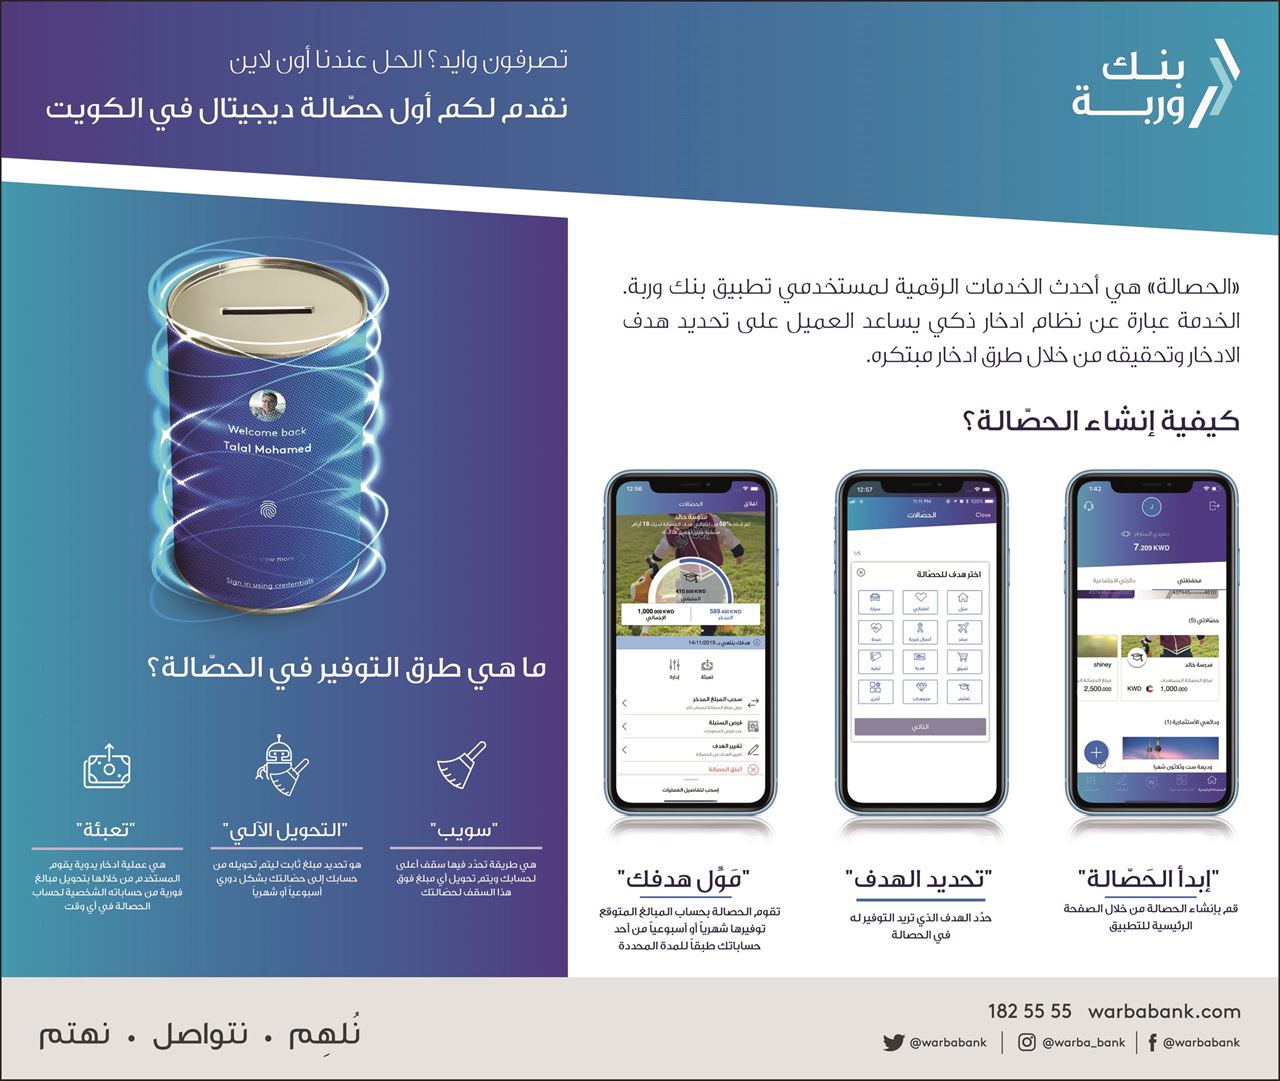 Warba Bank Launches “Hassala”, the Unique Digital Money Box Service